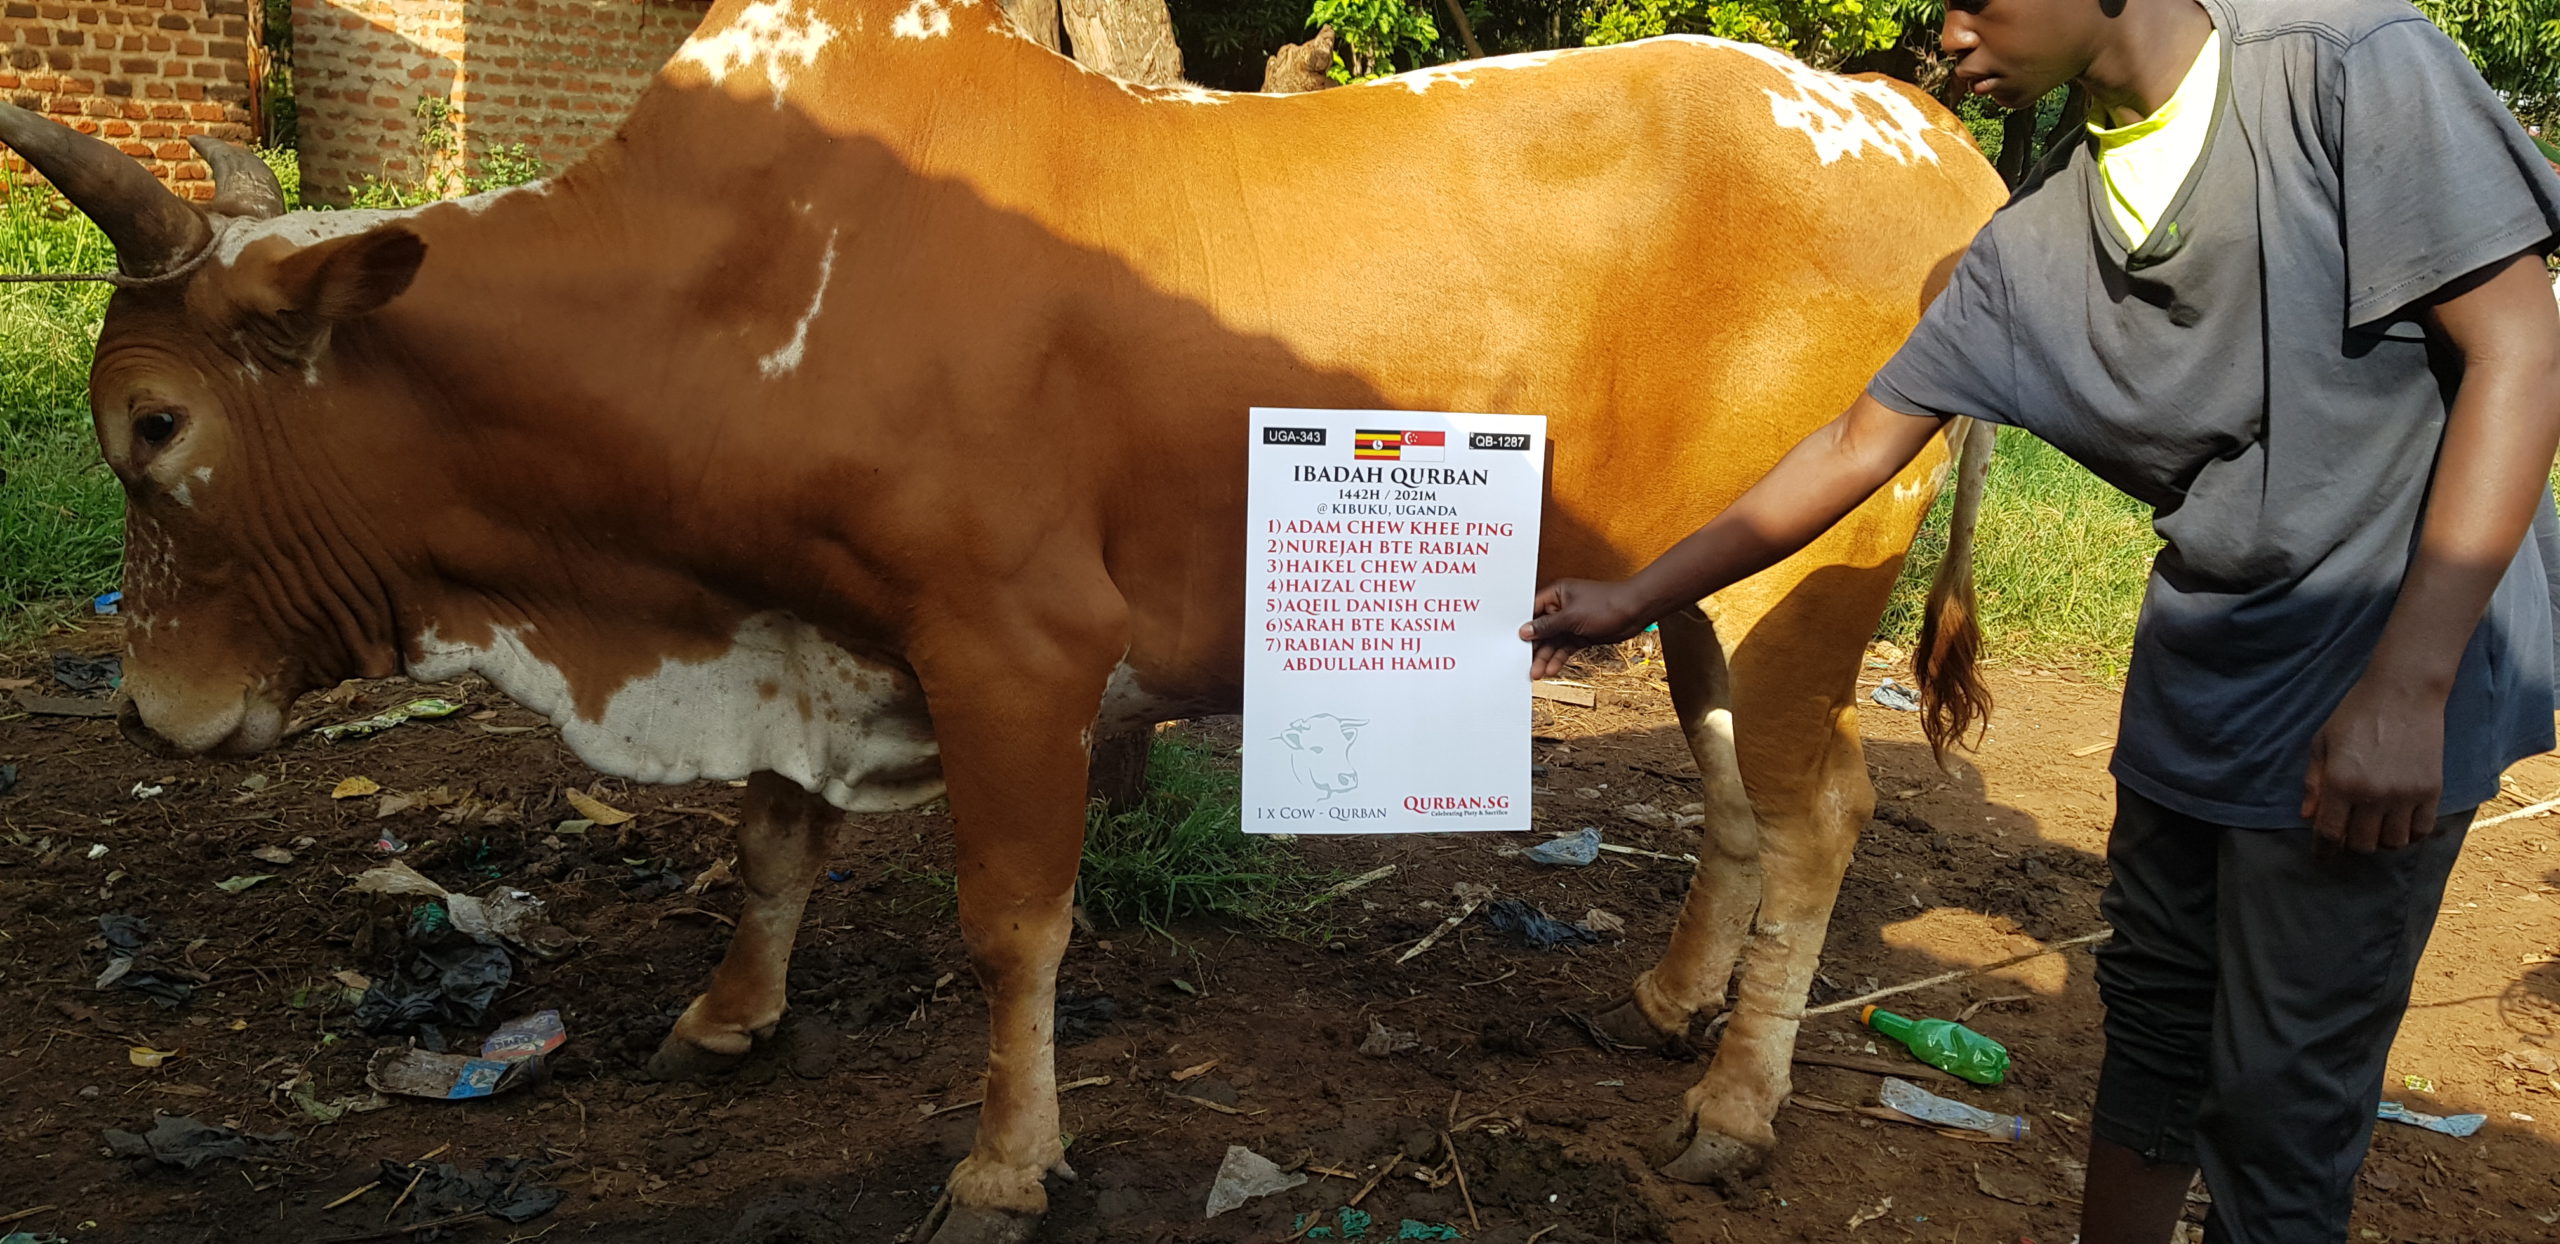 Qurban Uganda Cow